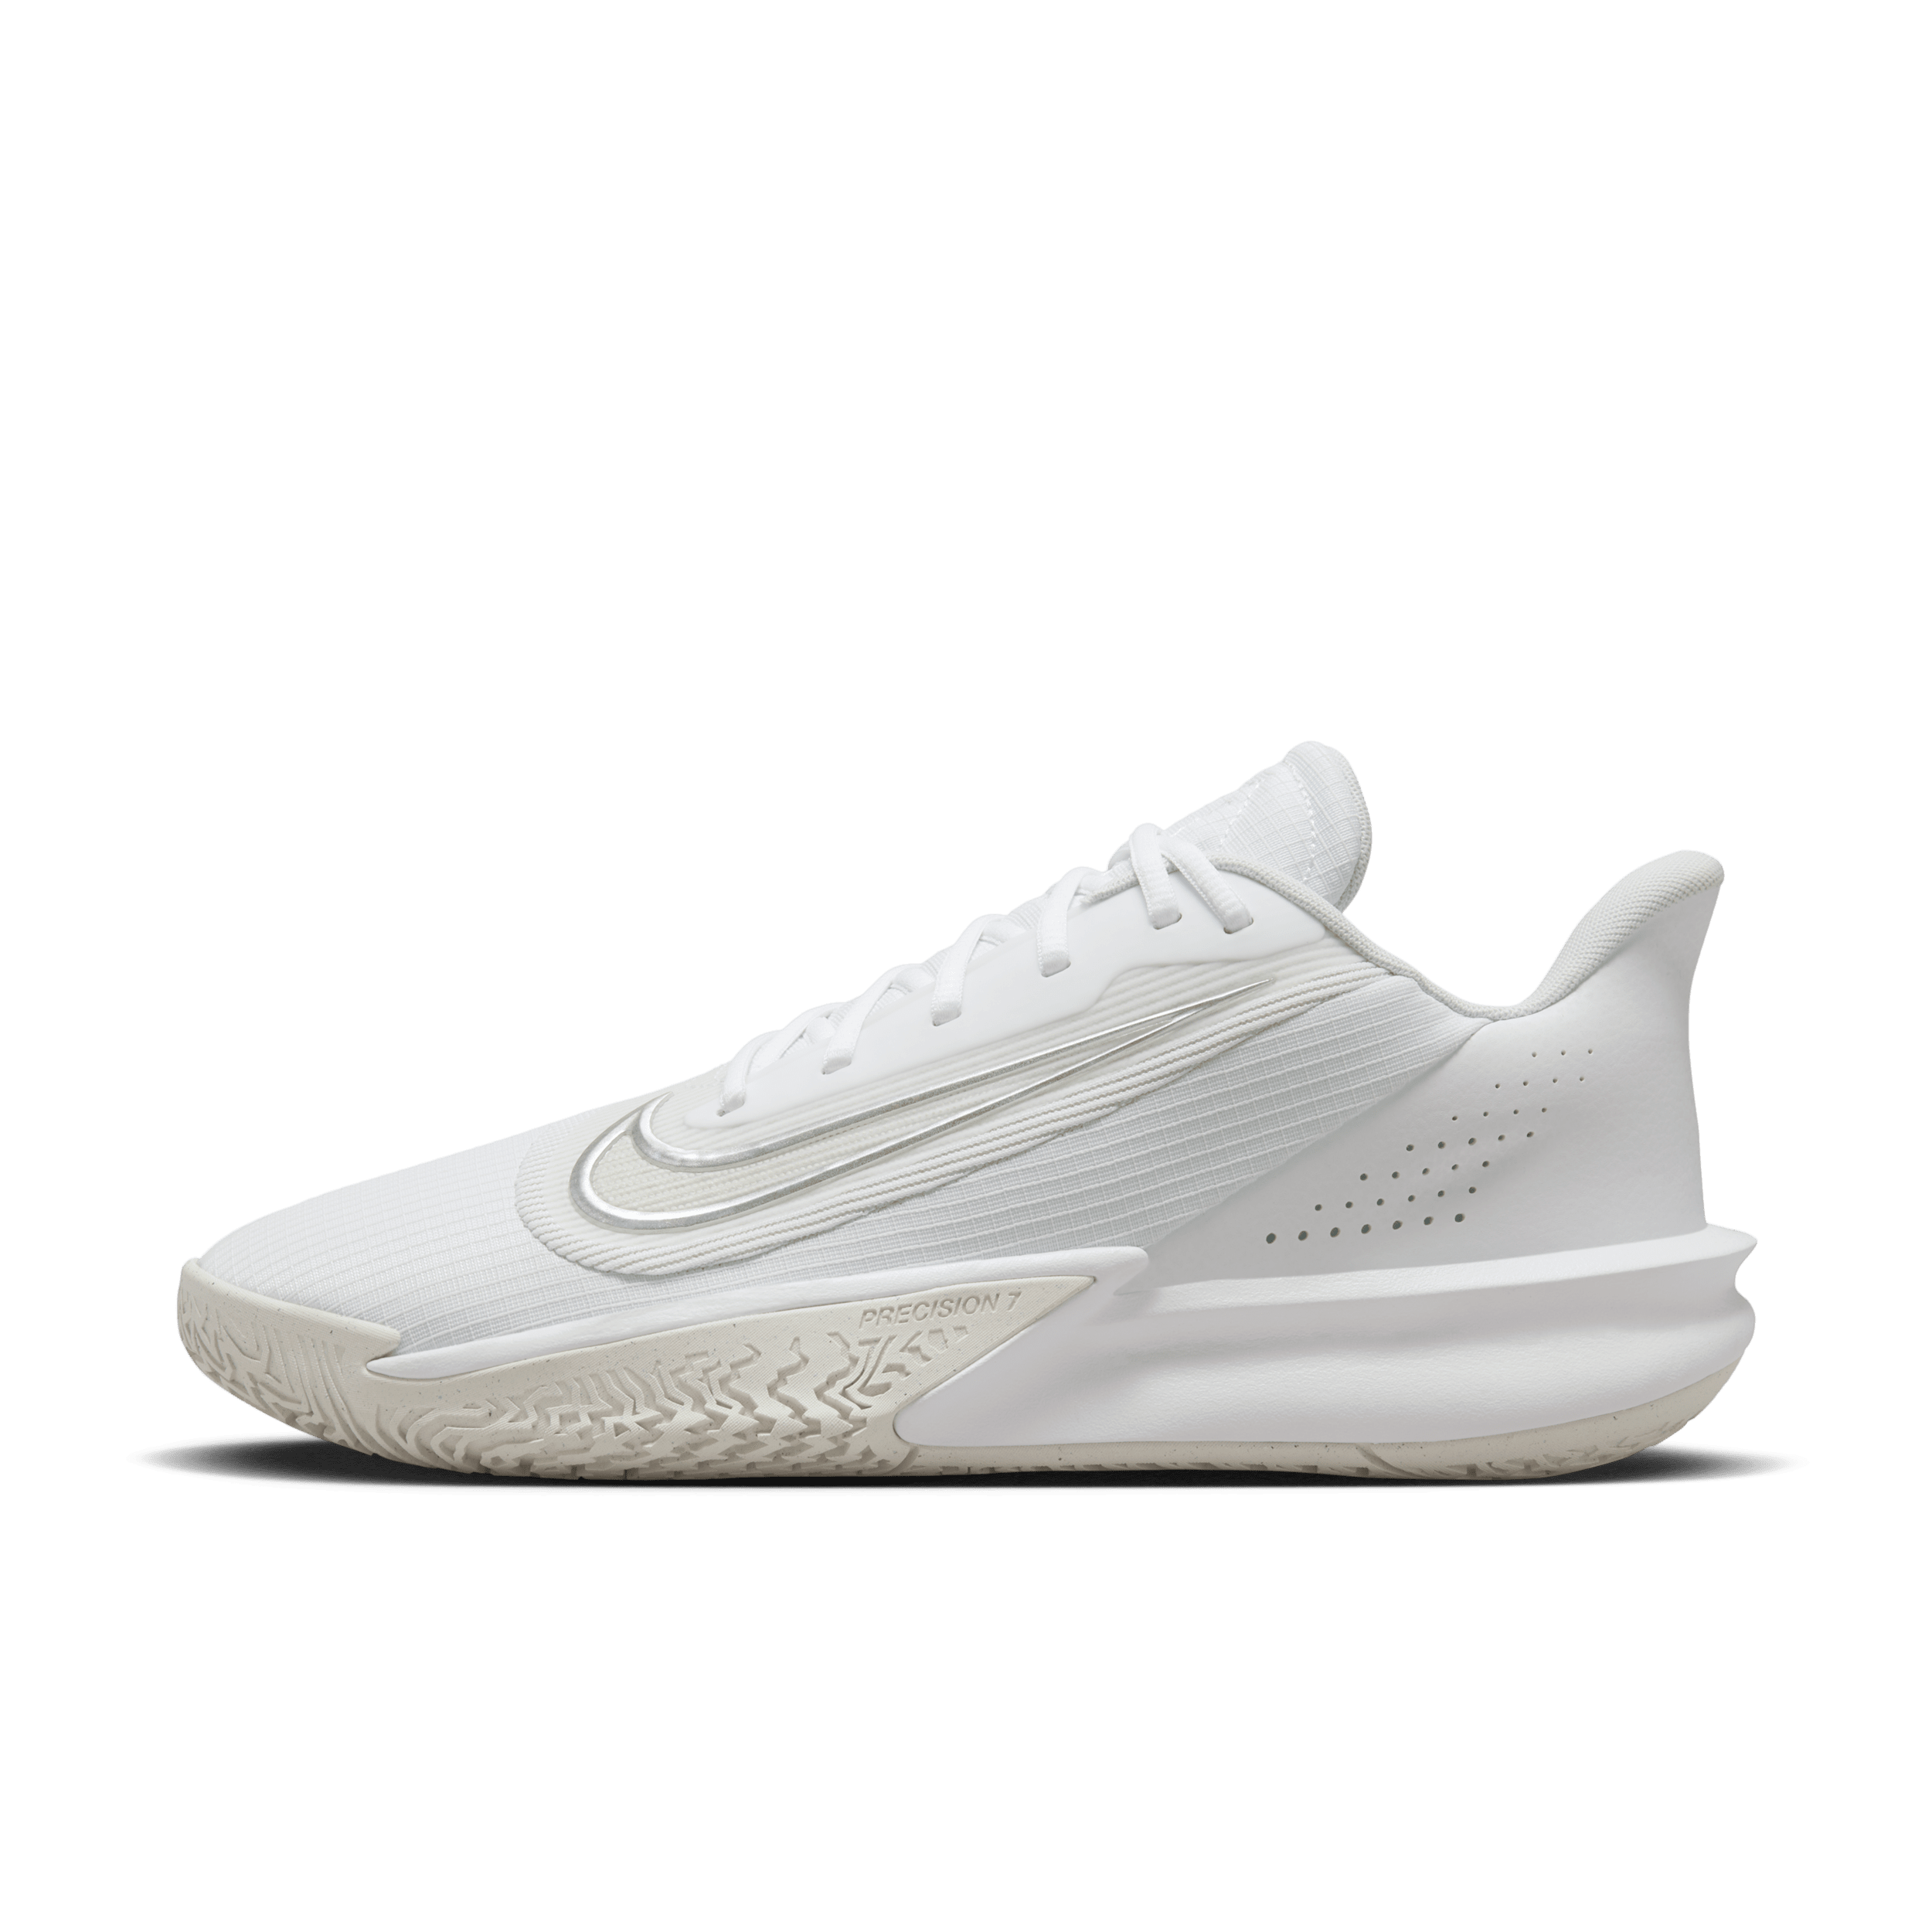 Nike Precision 7 Zapatillas de baloncesto - Hombre - Blanco